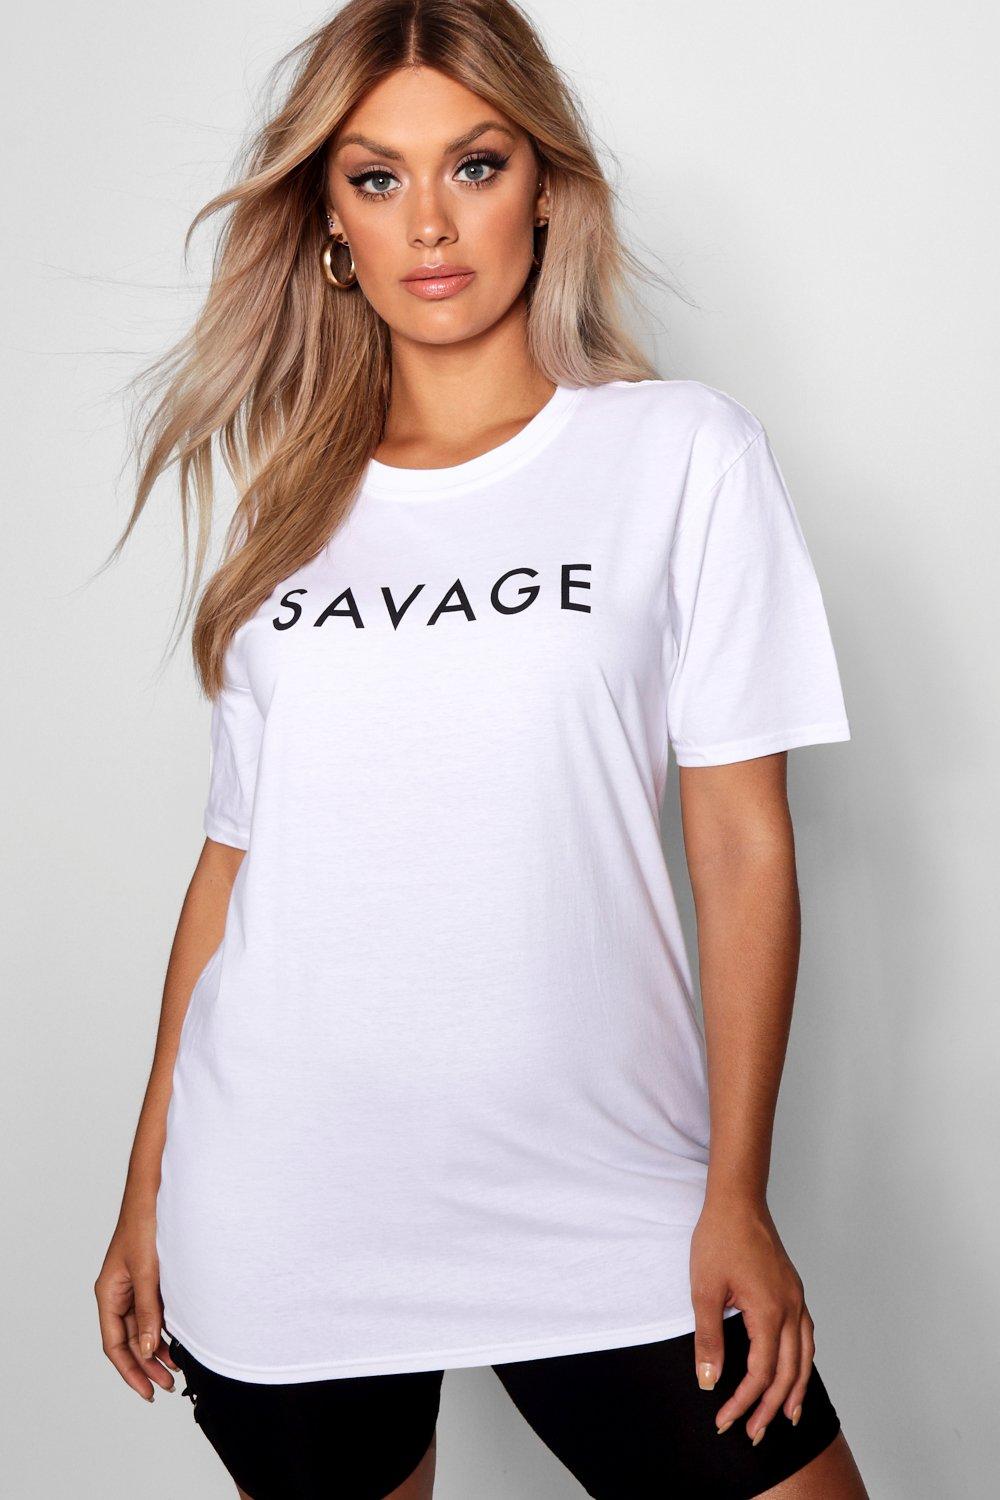 SAVAGE logo Girls Womens Ladies T Shirt Top Curve Plus size casual Tee Shirt